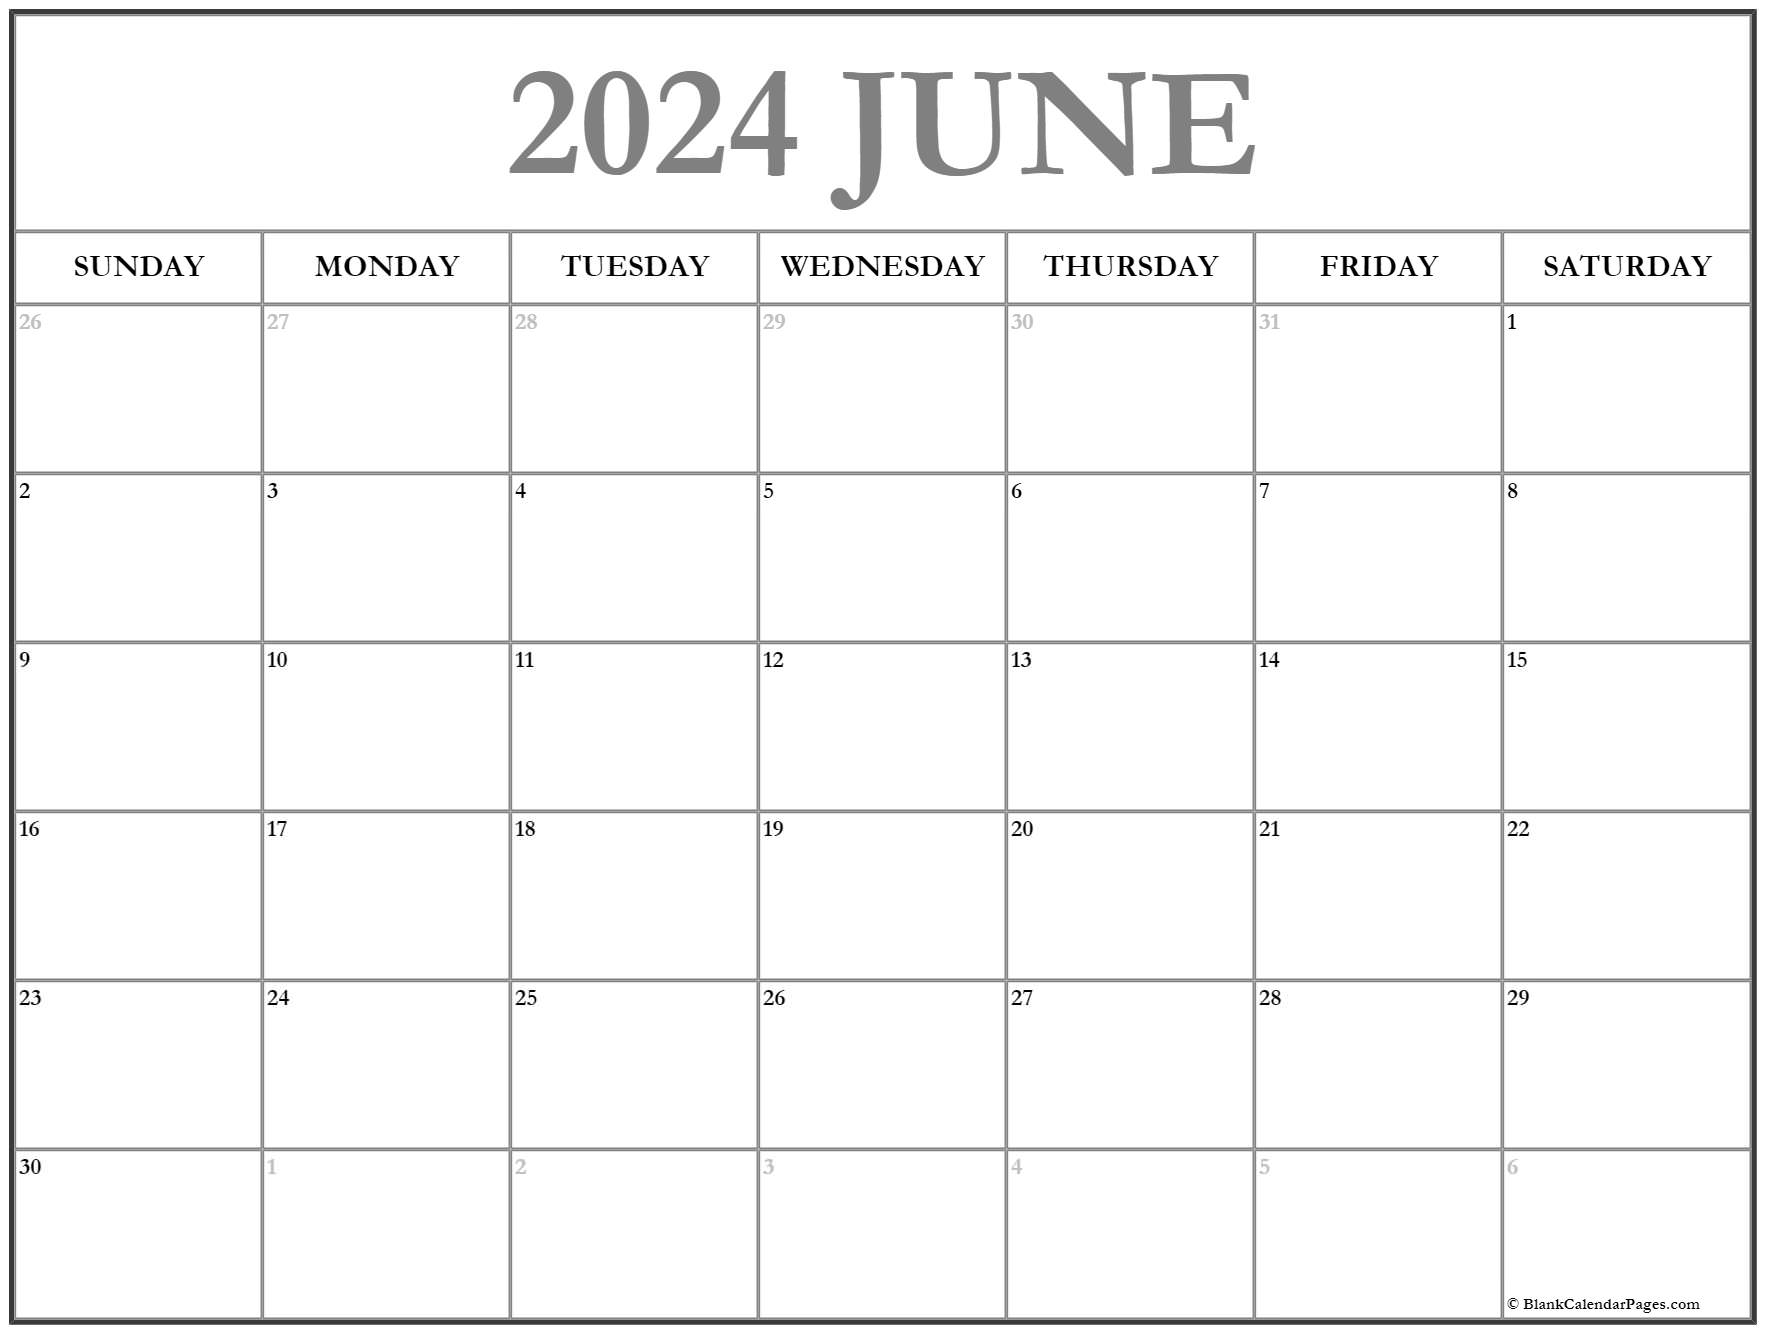 June 2022 calendar free printable calendar